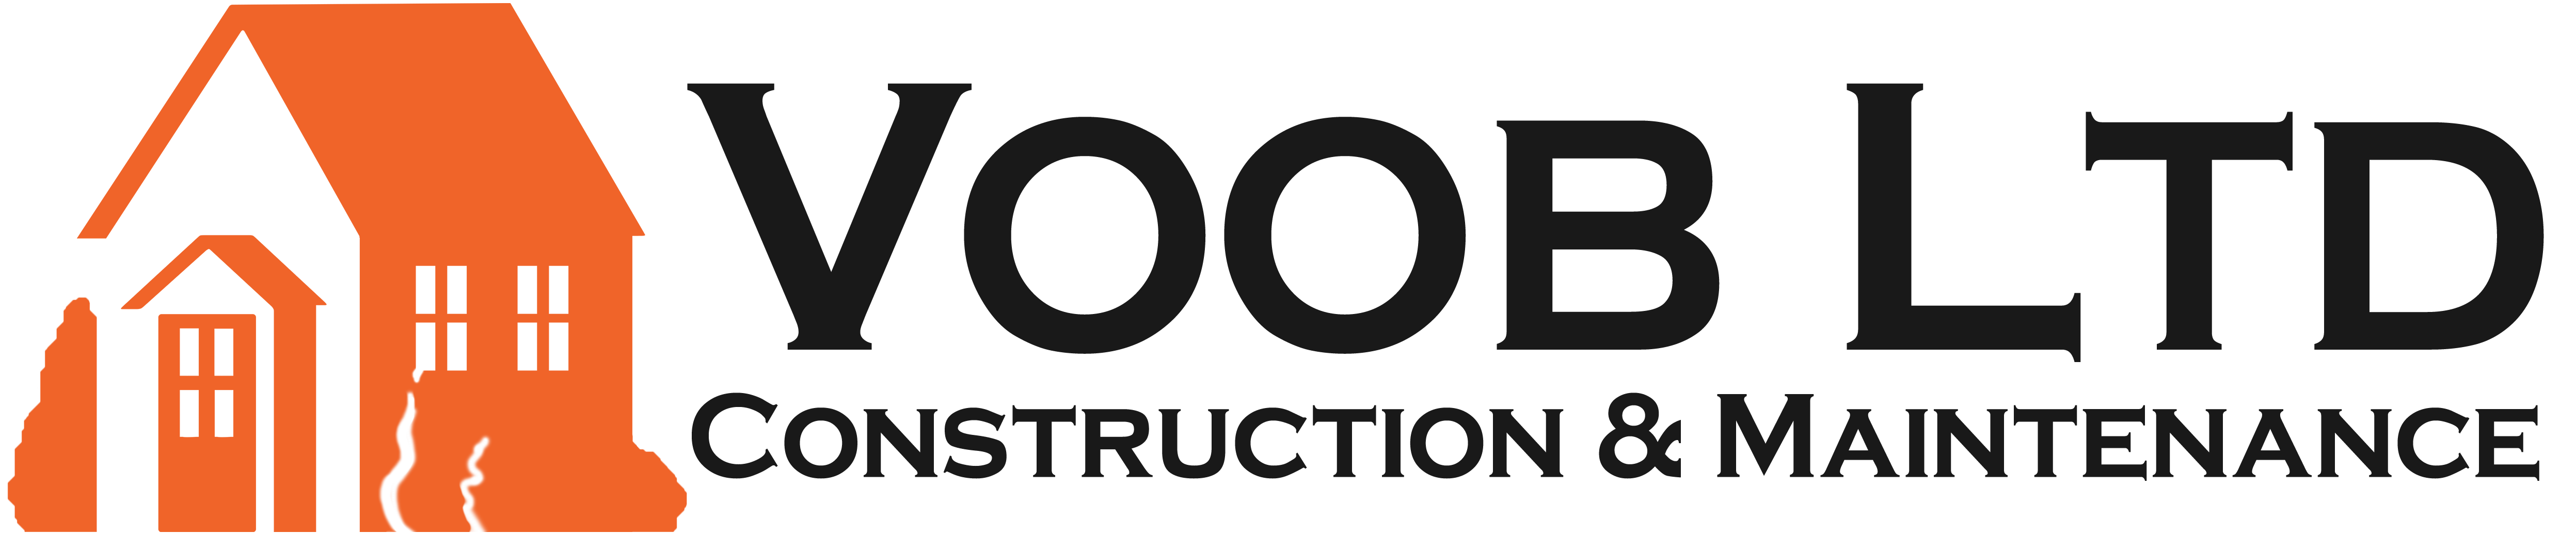 Voob LTD Black | Logo